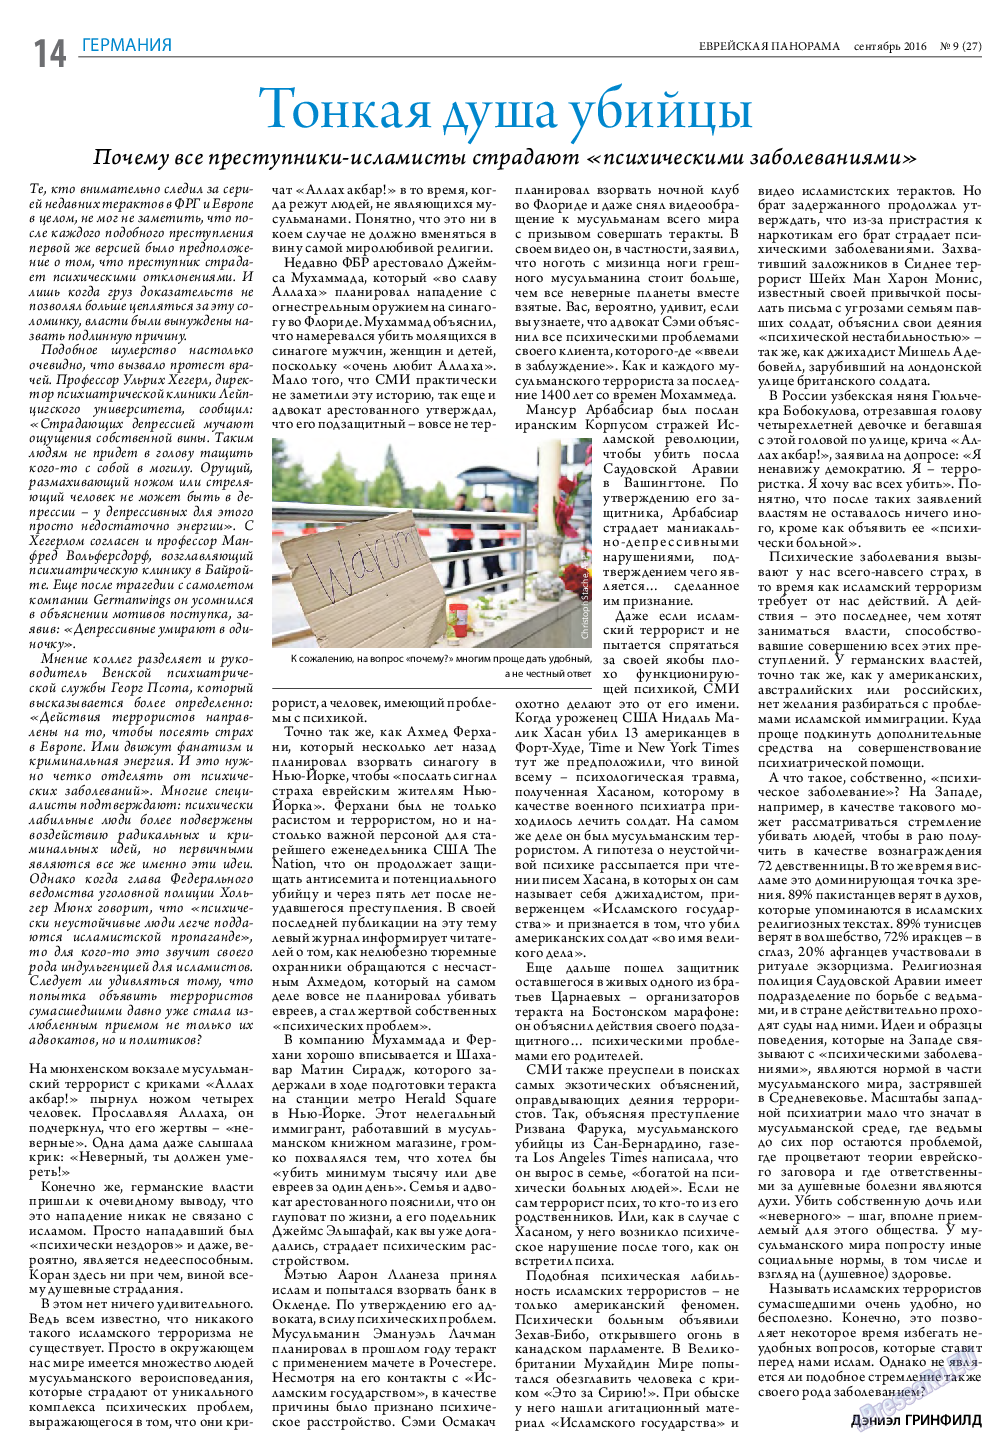 Еврейская панорама, газета. 2016 №9 стр.14